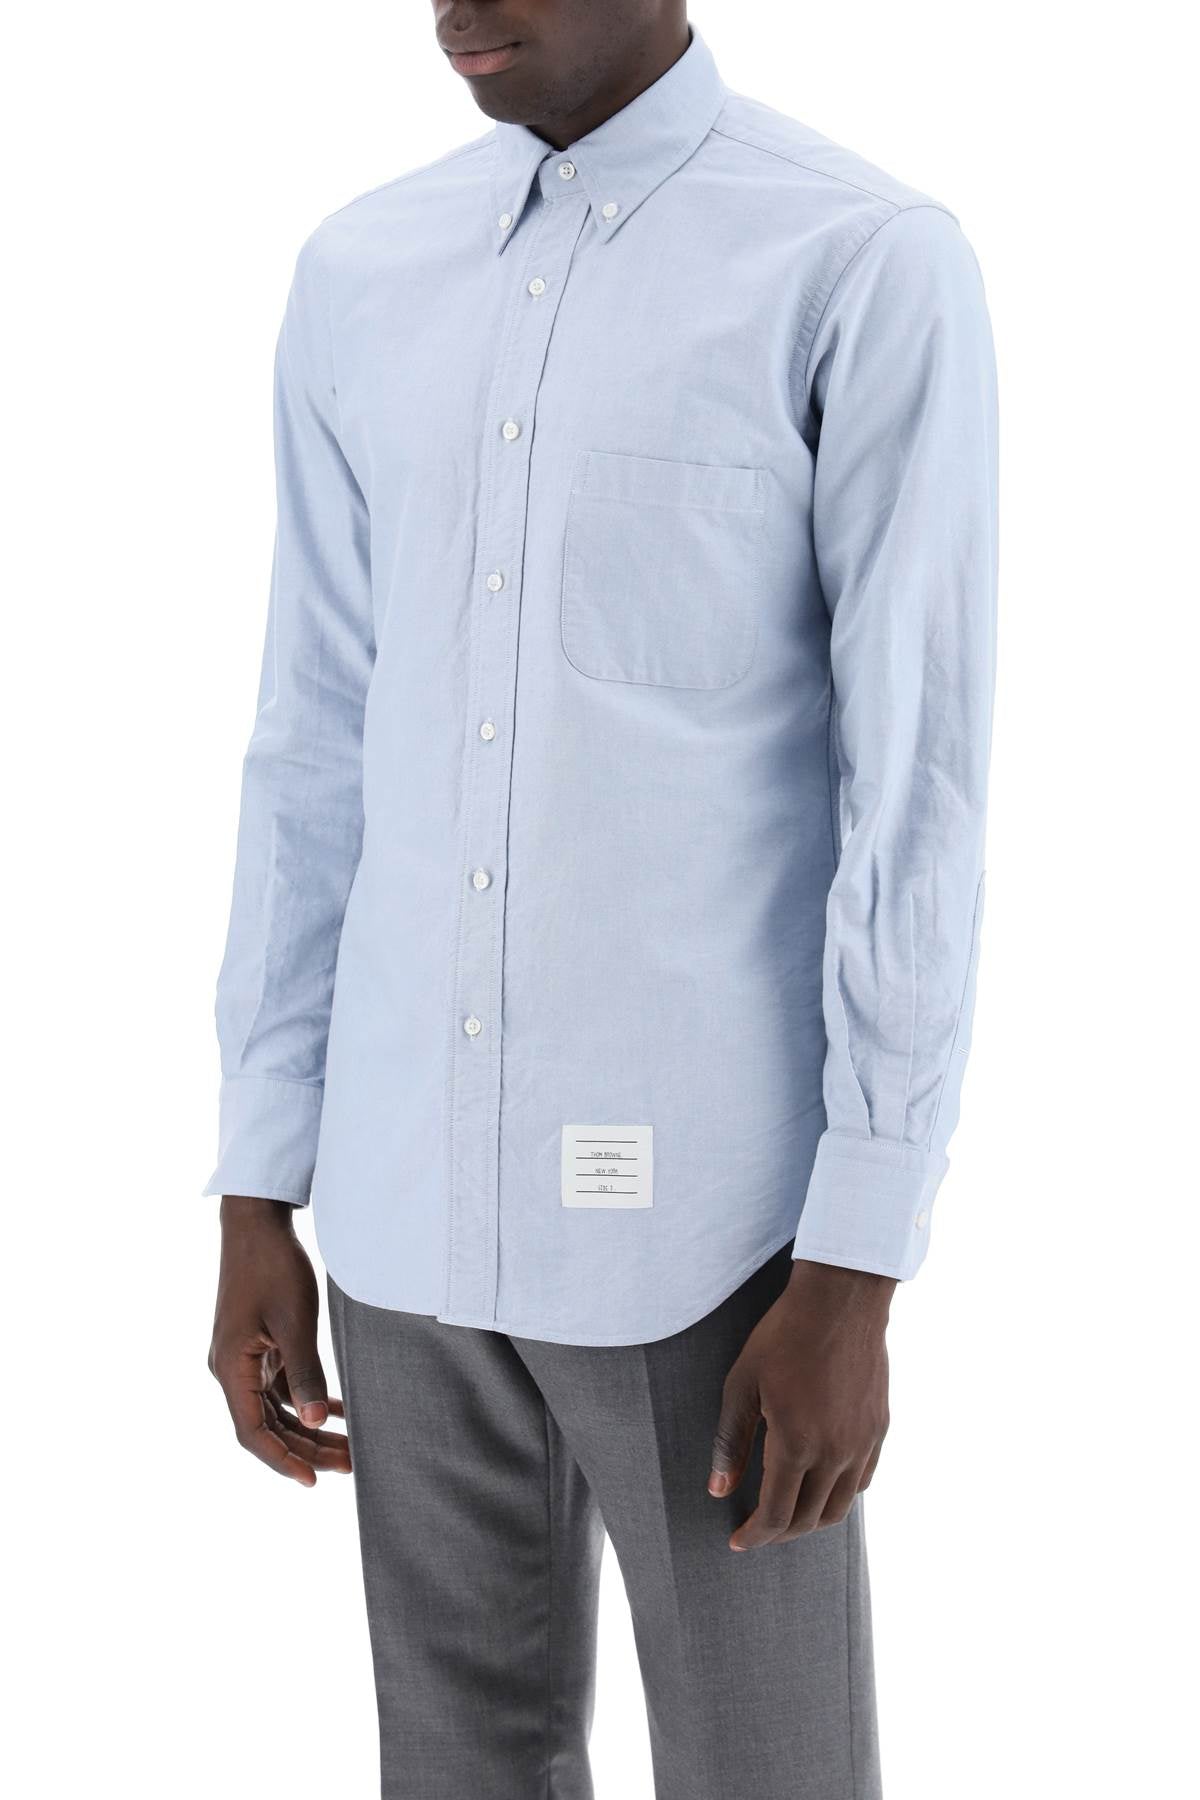 Thom Browne Oxford Cotton Button Down Shirt   Light Blue